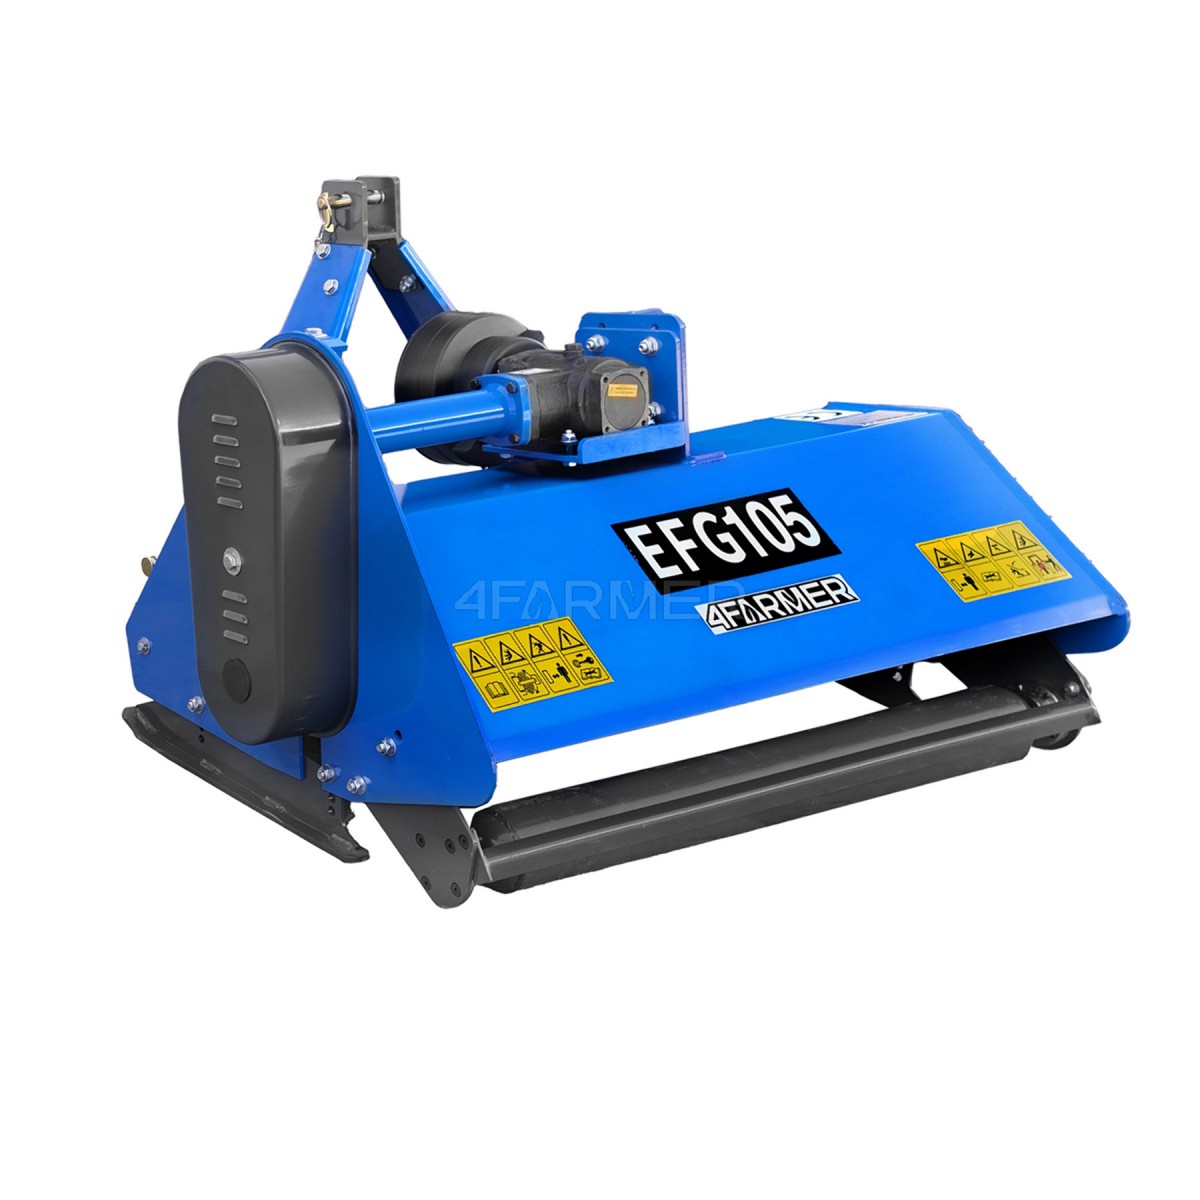 EFG 105 4FARMER flail mower - blue